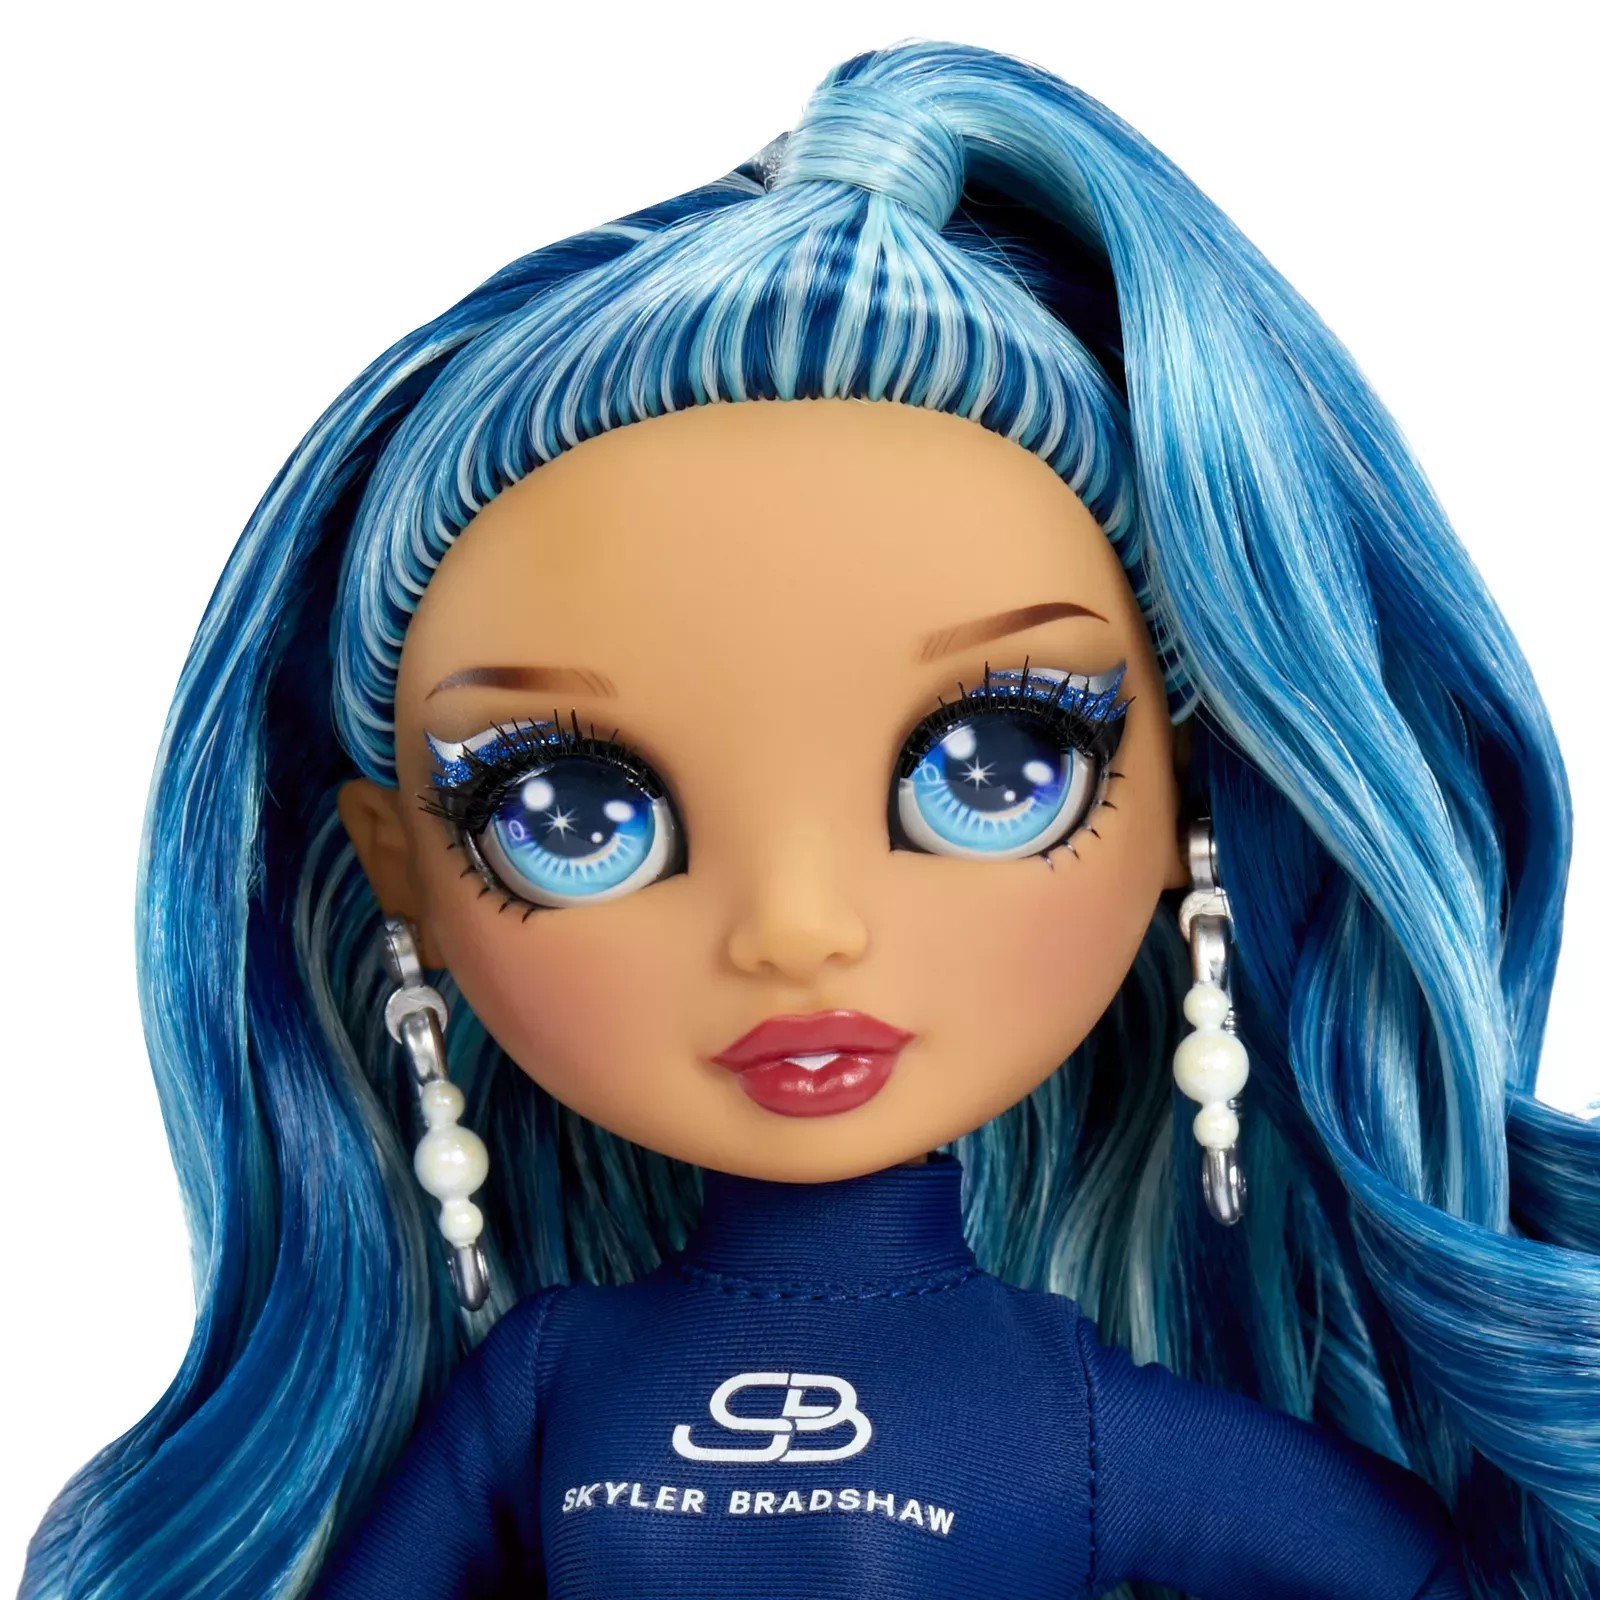 Rainbow High Dream & Design Fashion Studio Playset, Fashion Designer  Playset with Exclusive Blue Skyler Doll Plus Easy No Sew Fashion Kit Kids  Gift 4-12 & Collectors 